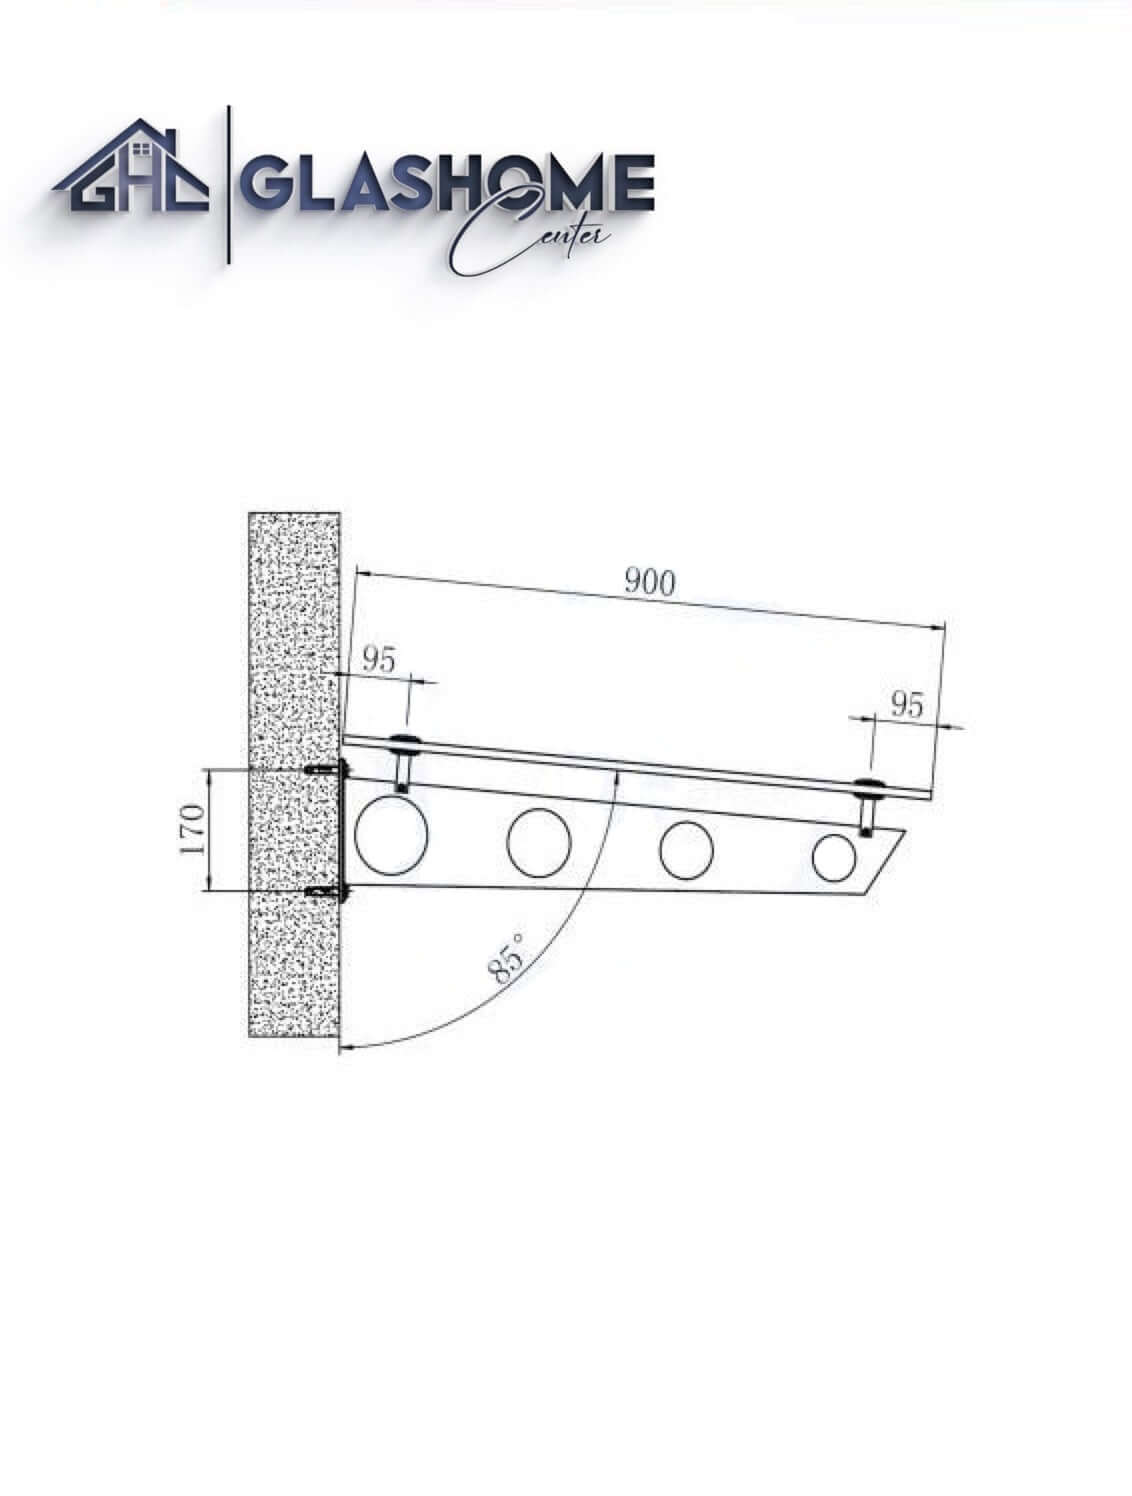 GlasHomeCenter - glass canopy - Clear glass - 250x90cm - 13.1mm VSG - incl. 3 Edelstahlhalterungen Variant "Stockholm"